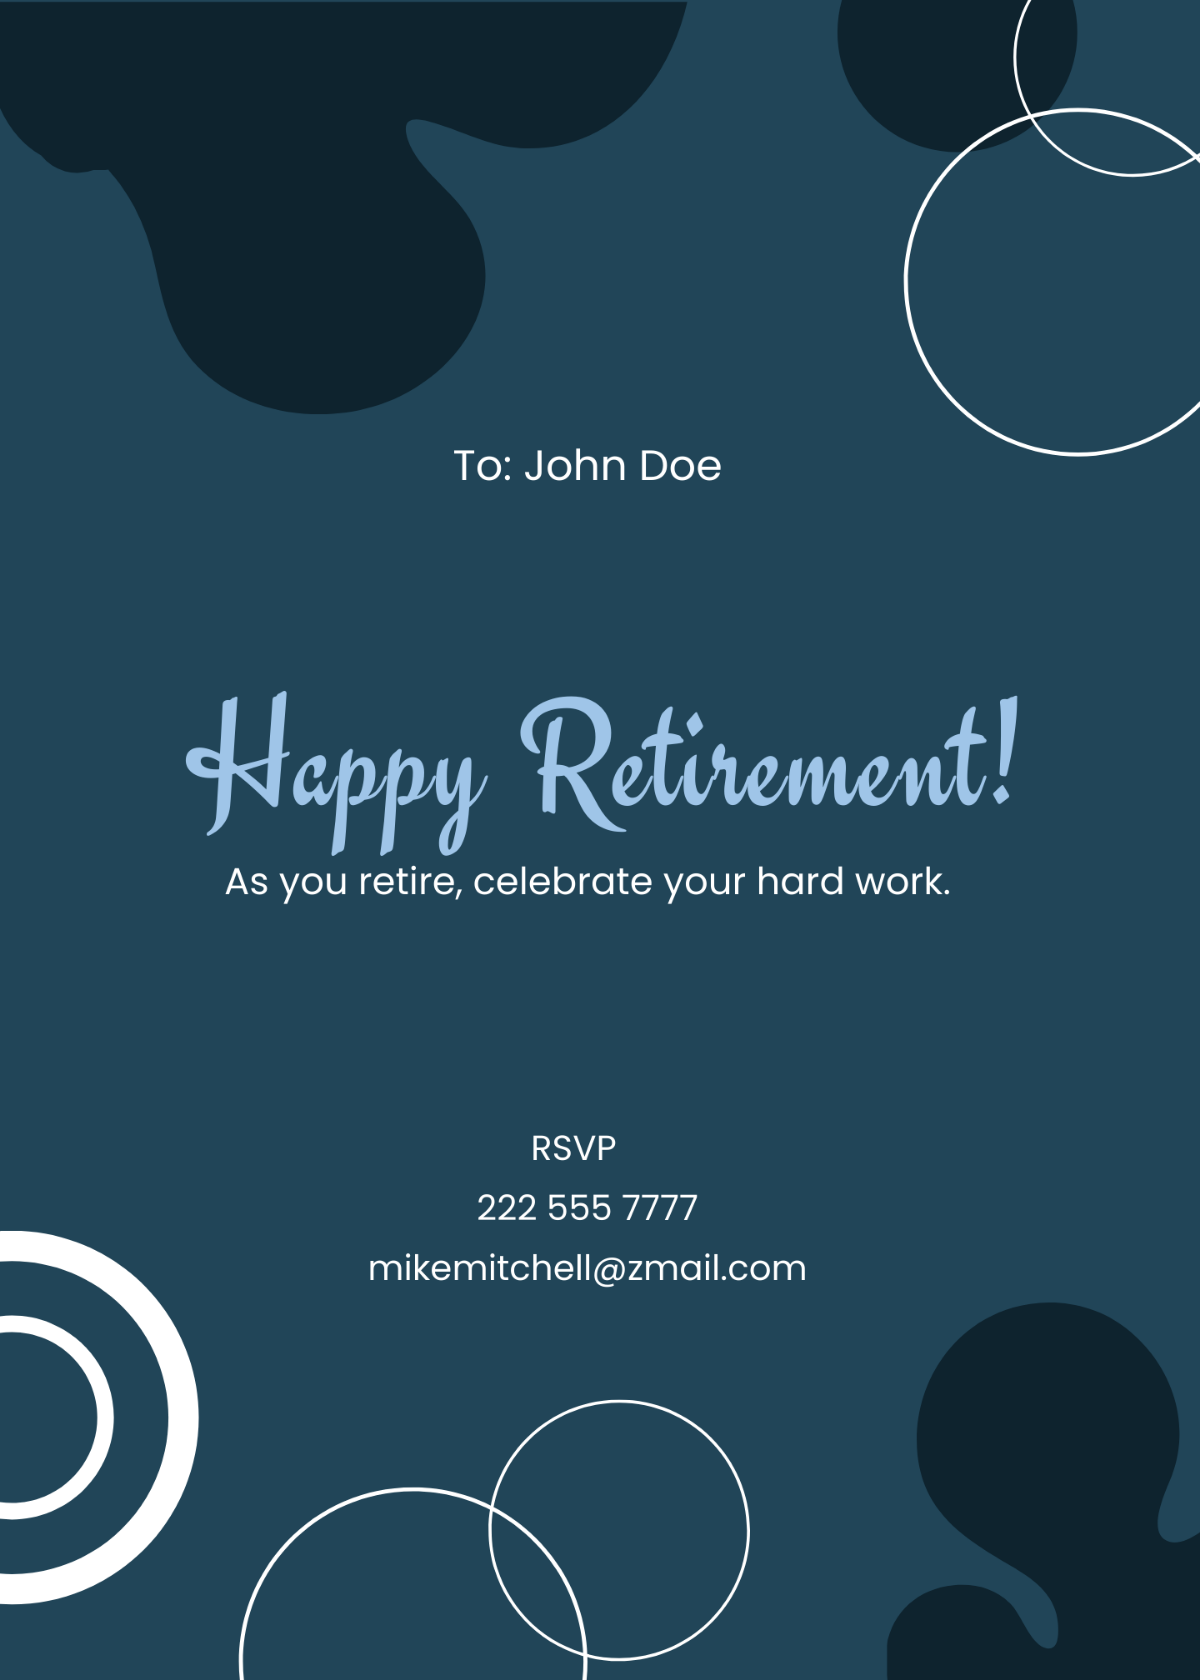 Digital Retirement Card Template